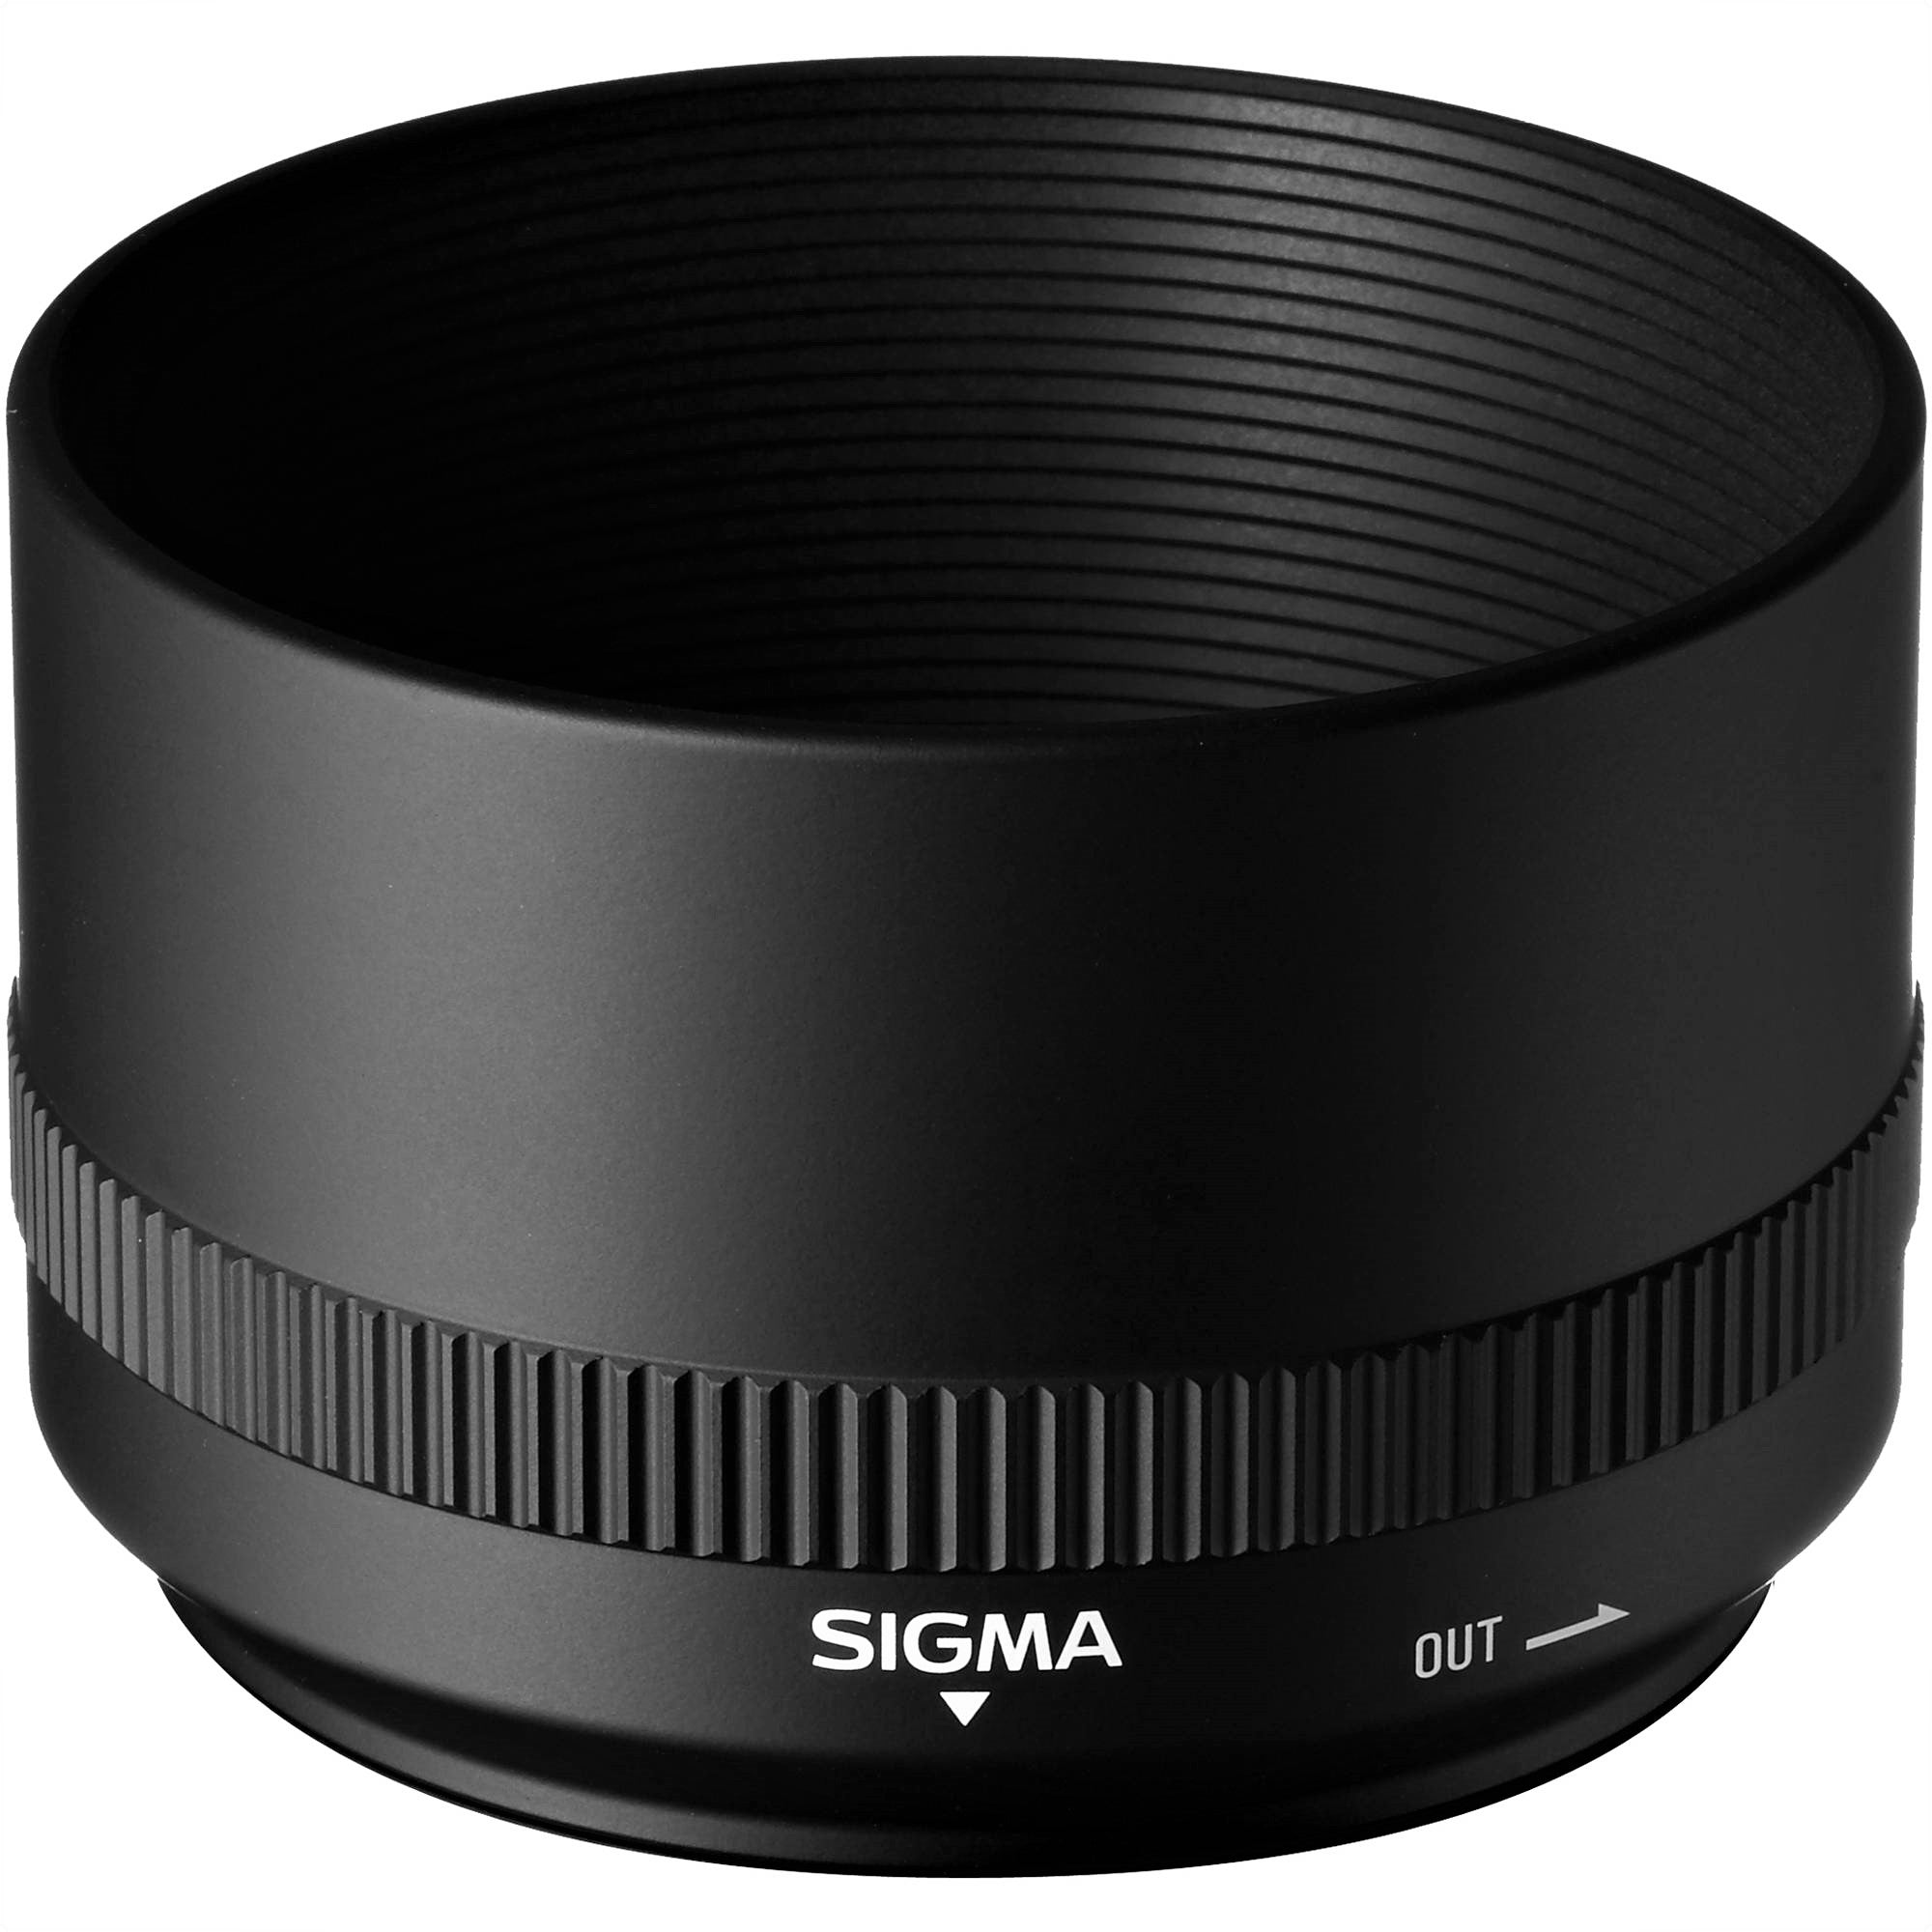 Sigma Lens Hood for 105mm F2.8 Macro EX Digital OS HSM Lens